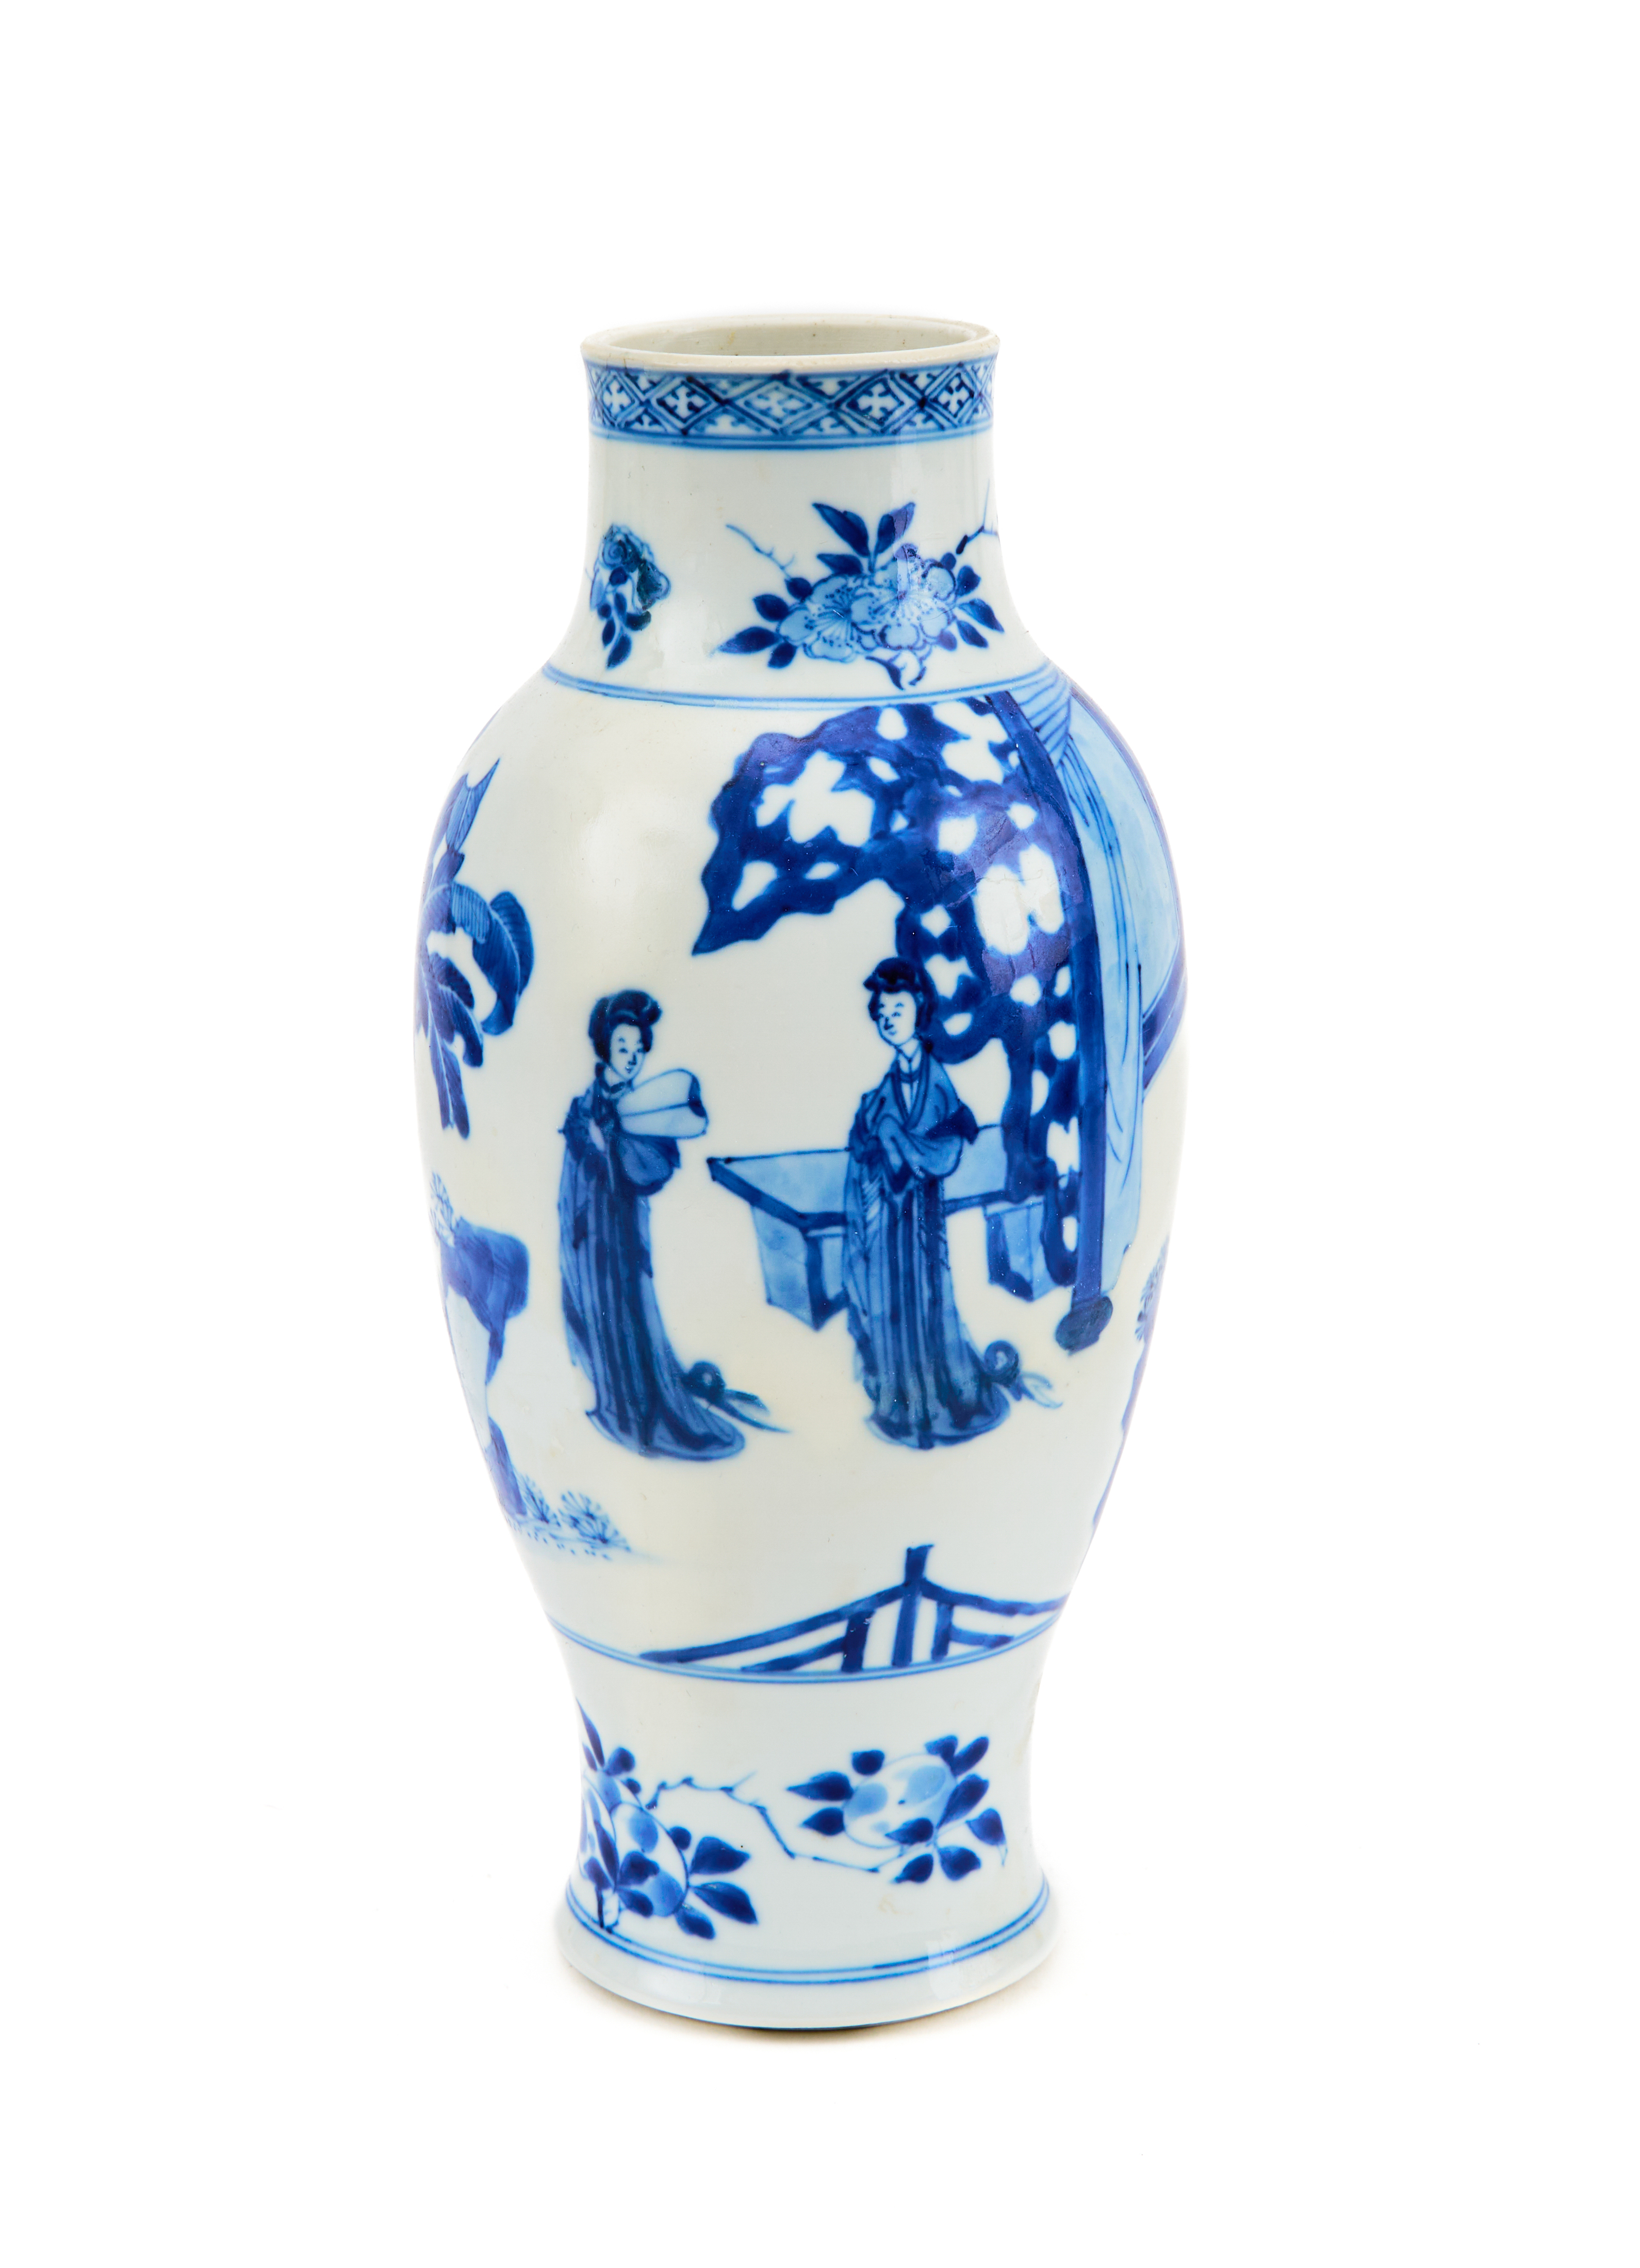 A CHINESE BLUE & WHITE VASE, KANGXI PERIOD (1662-1722)